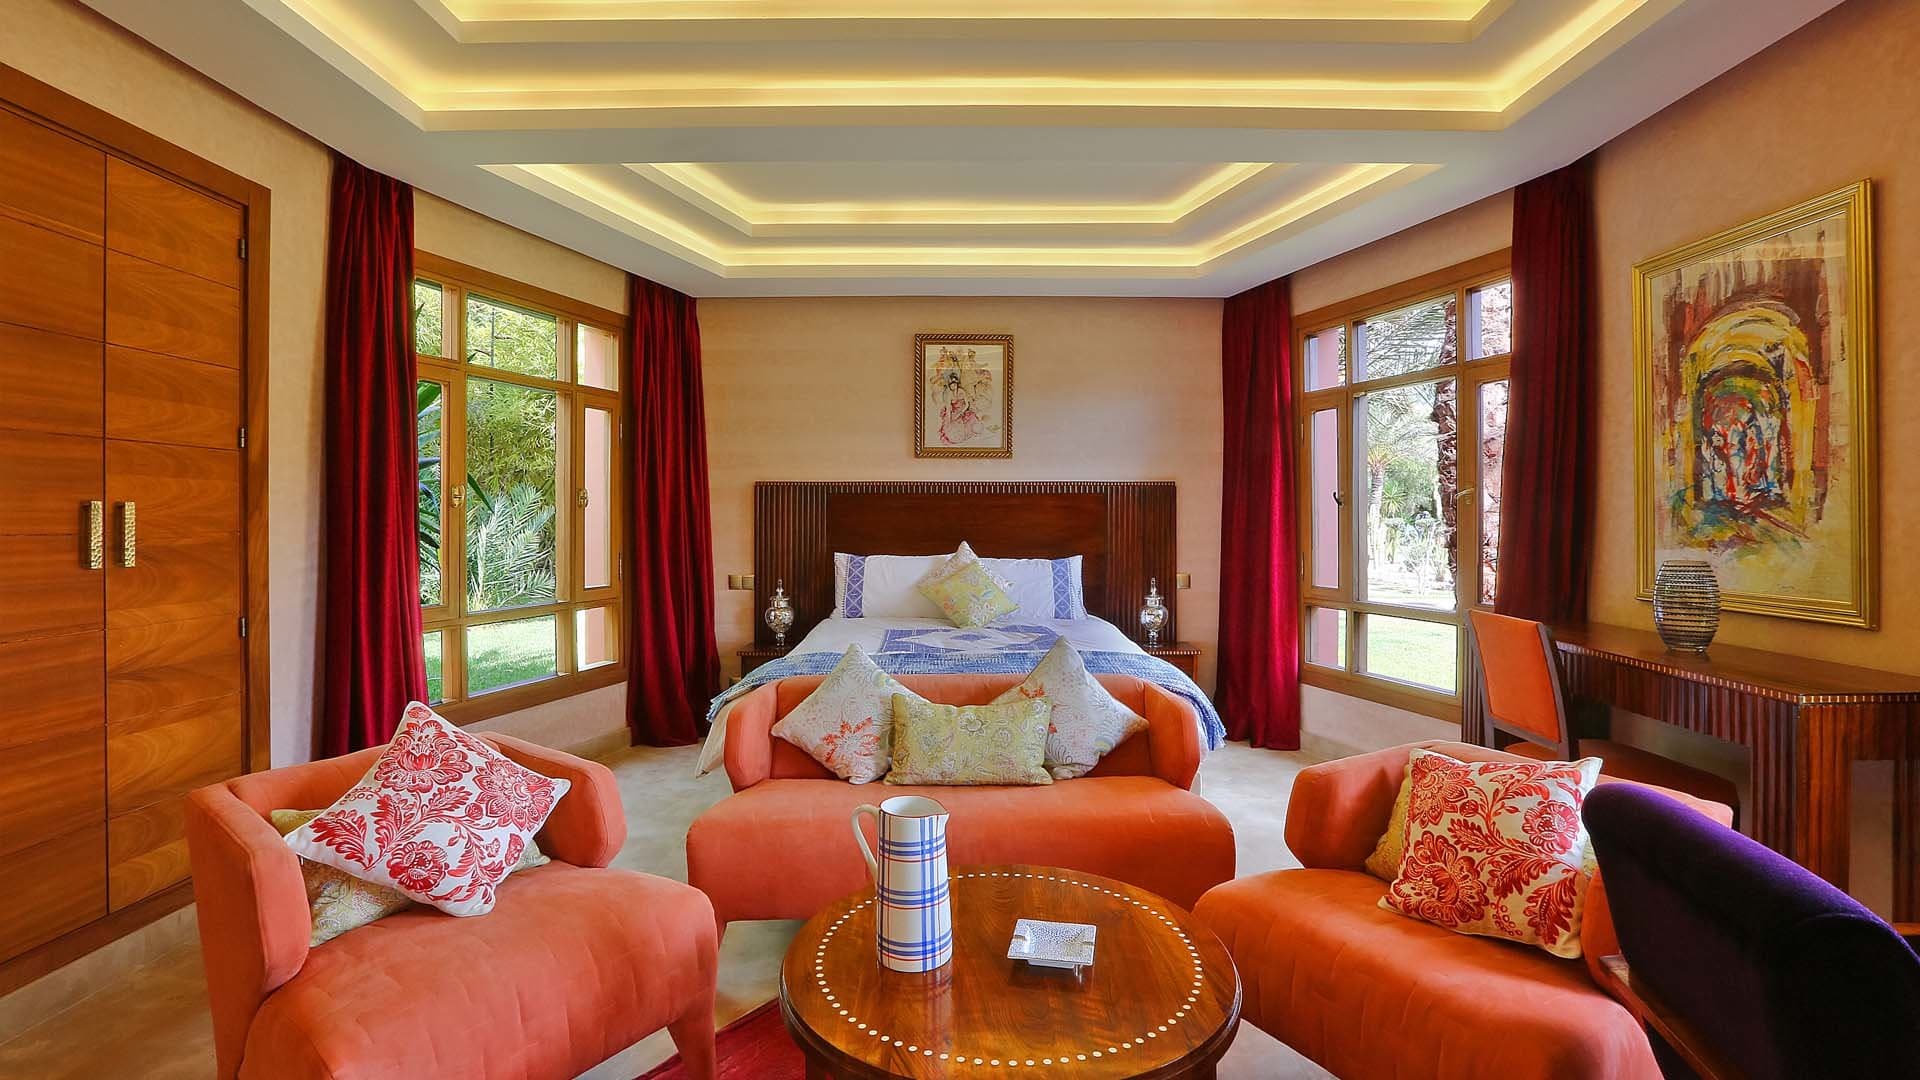 10 Bedroom Villa For Sale Marrakech Lp08701 Ae5a67c683ada00.jpg